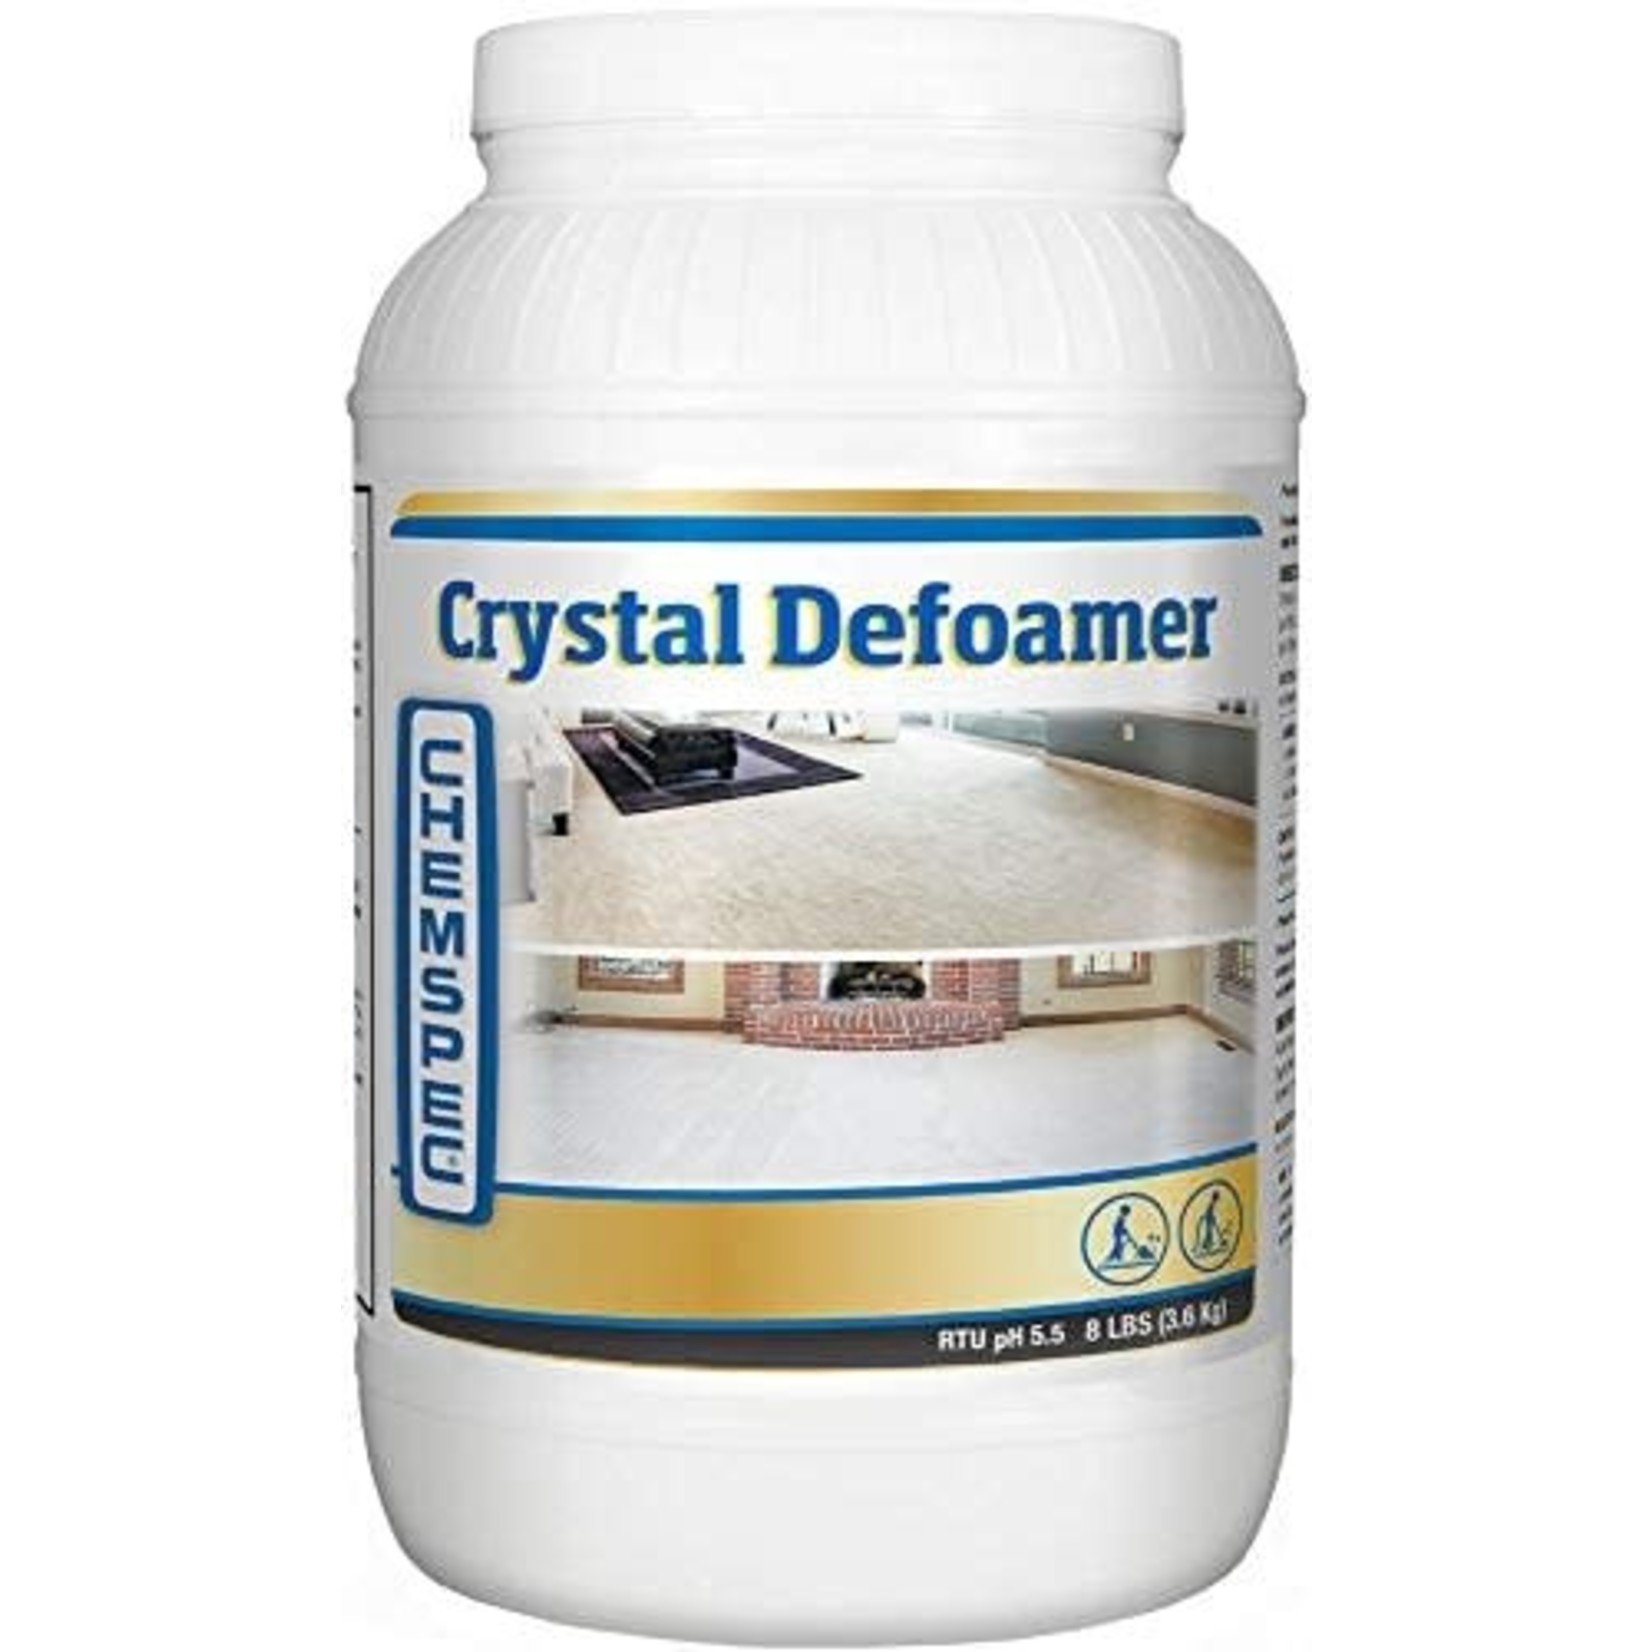 Chempsec Chemspec Crystal Defoamer  8 lbs.